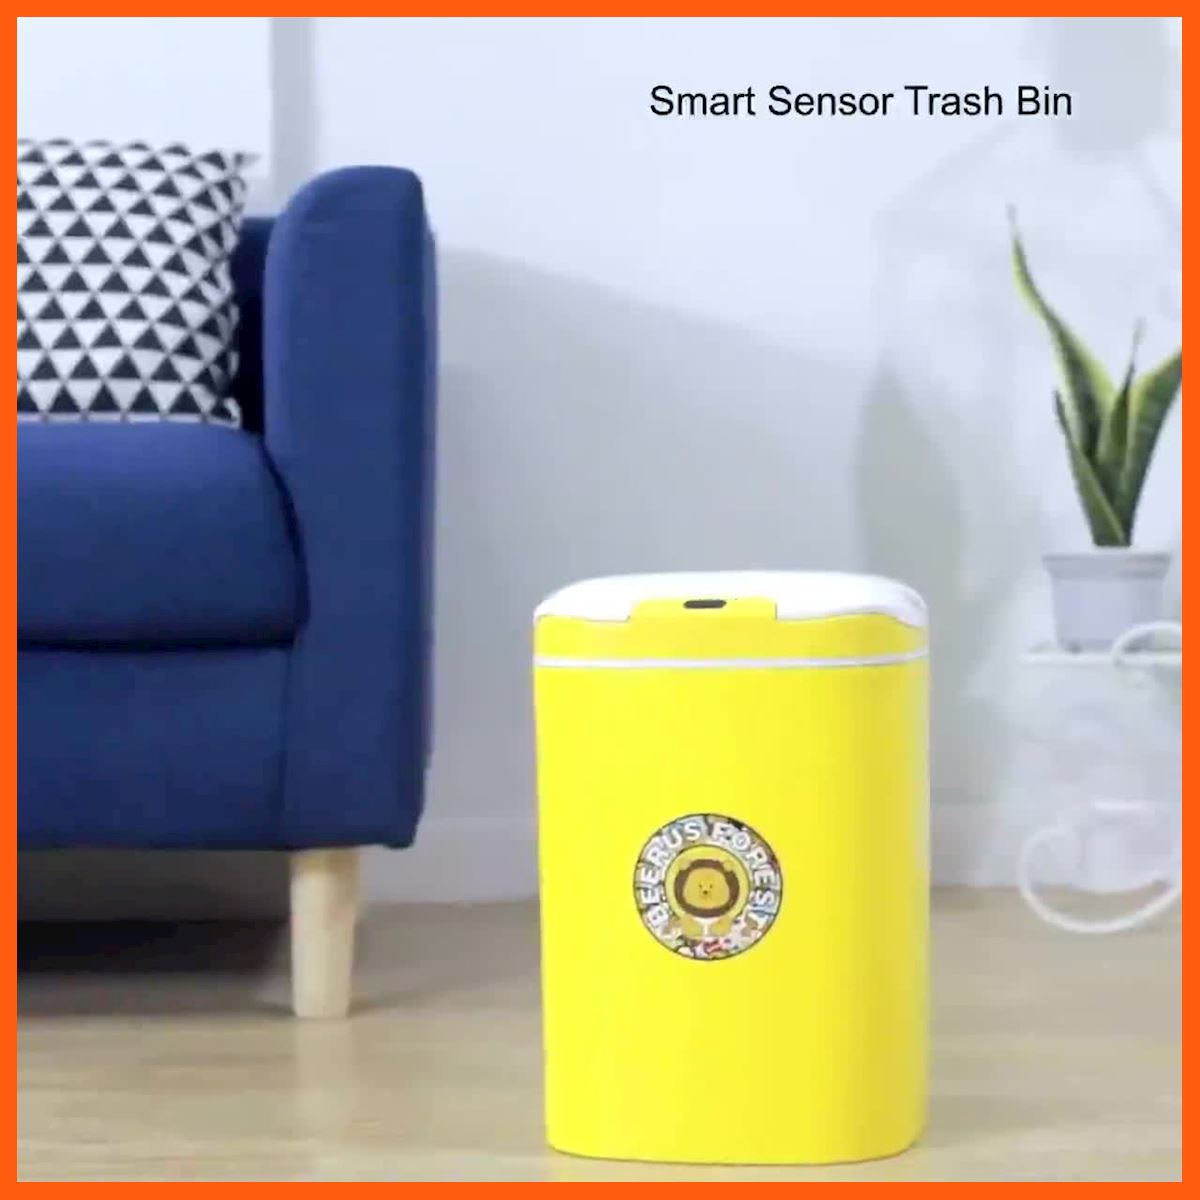 Sale: ถังขยะอัจฉริยะ Smart Sensor Trash Bin ระบบเซนเซอร์อัฉริยะทำงานเองอัตโนมัติ